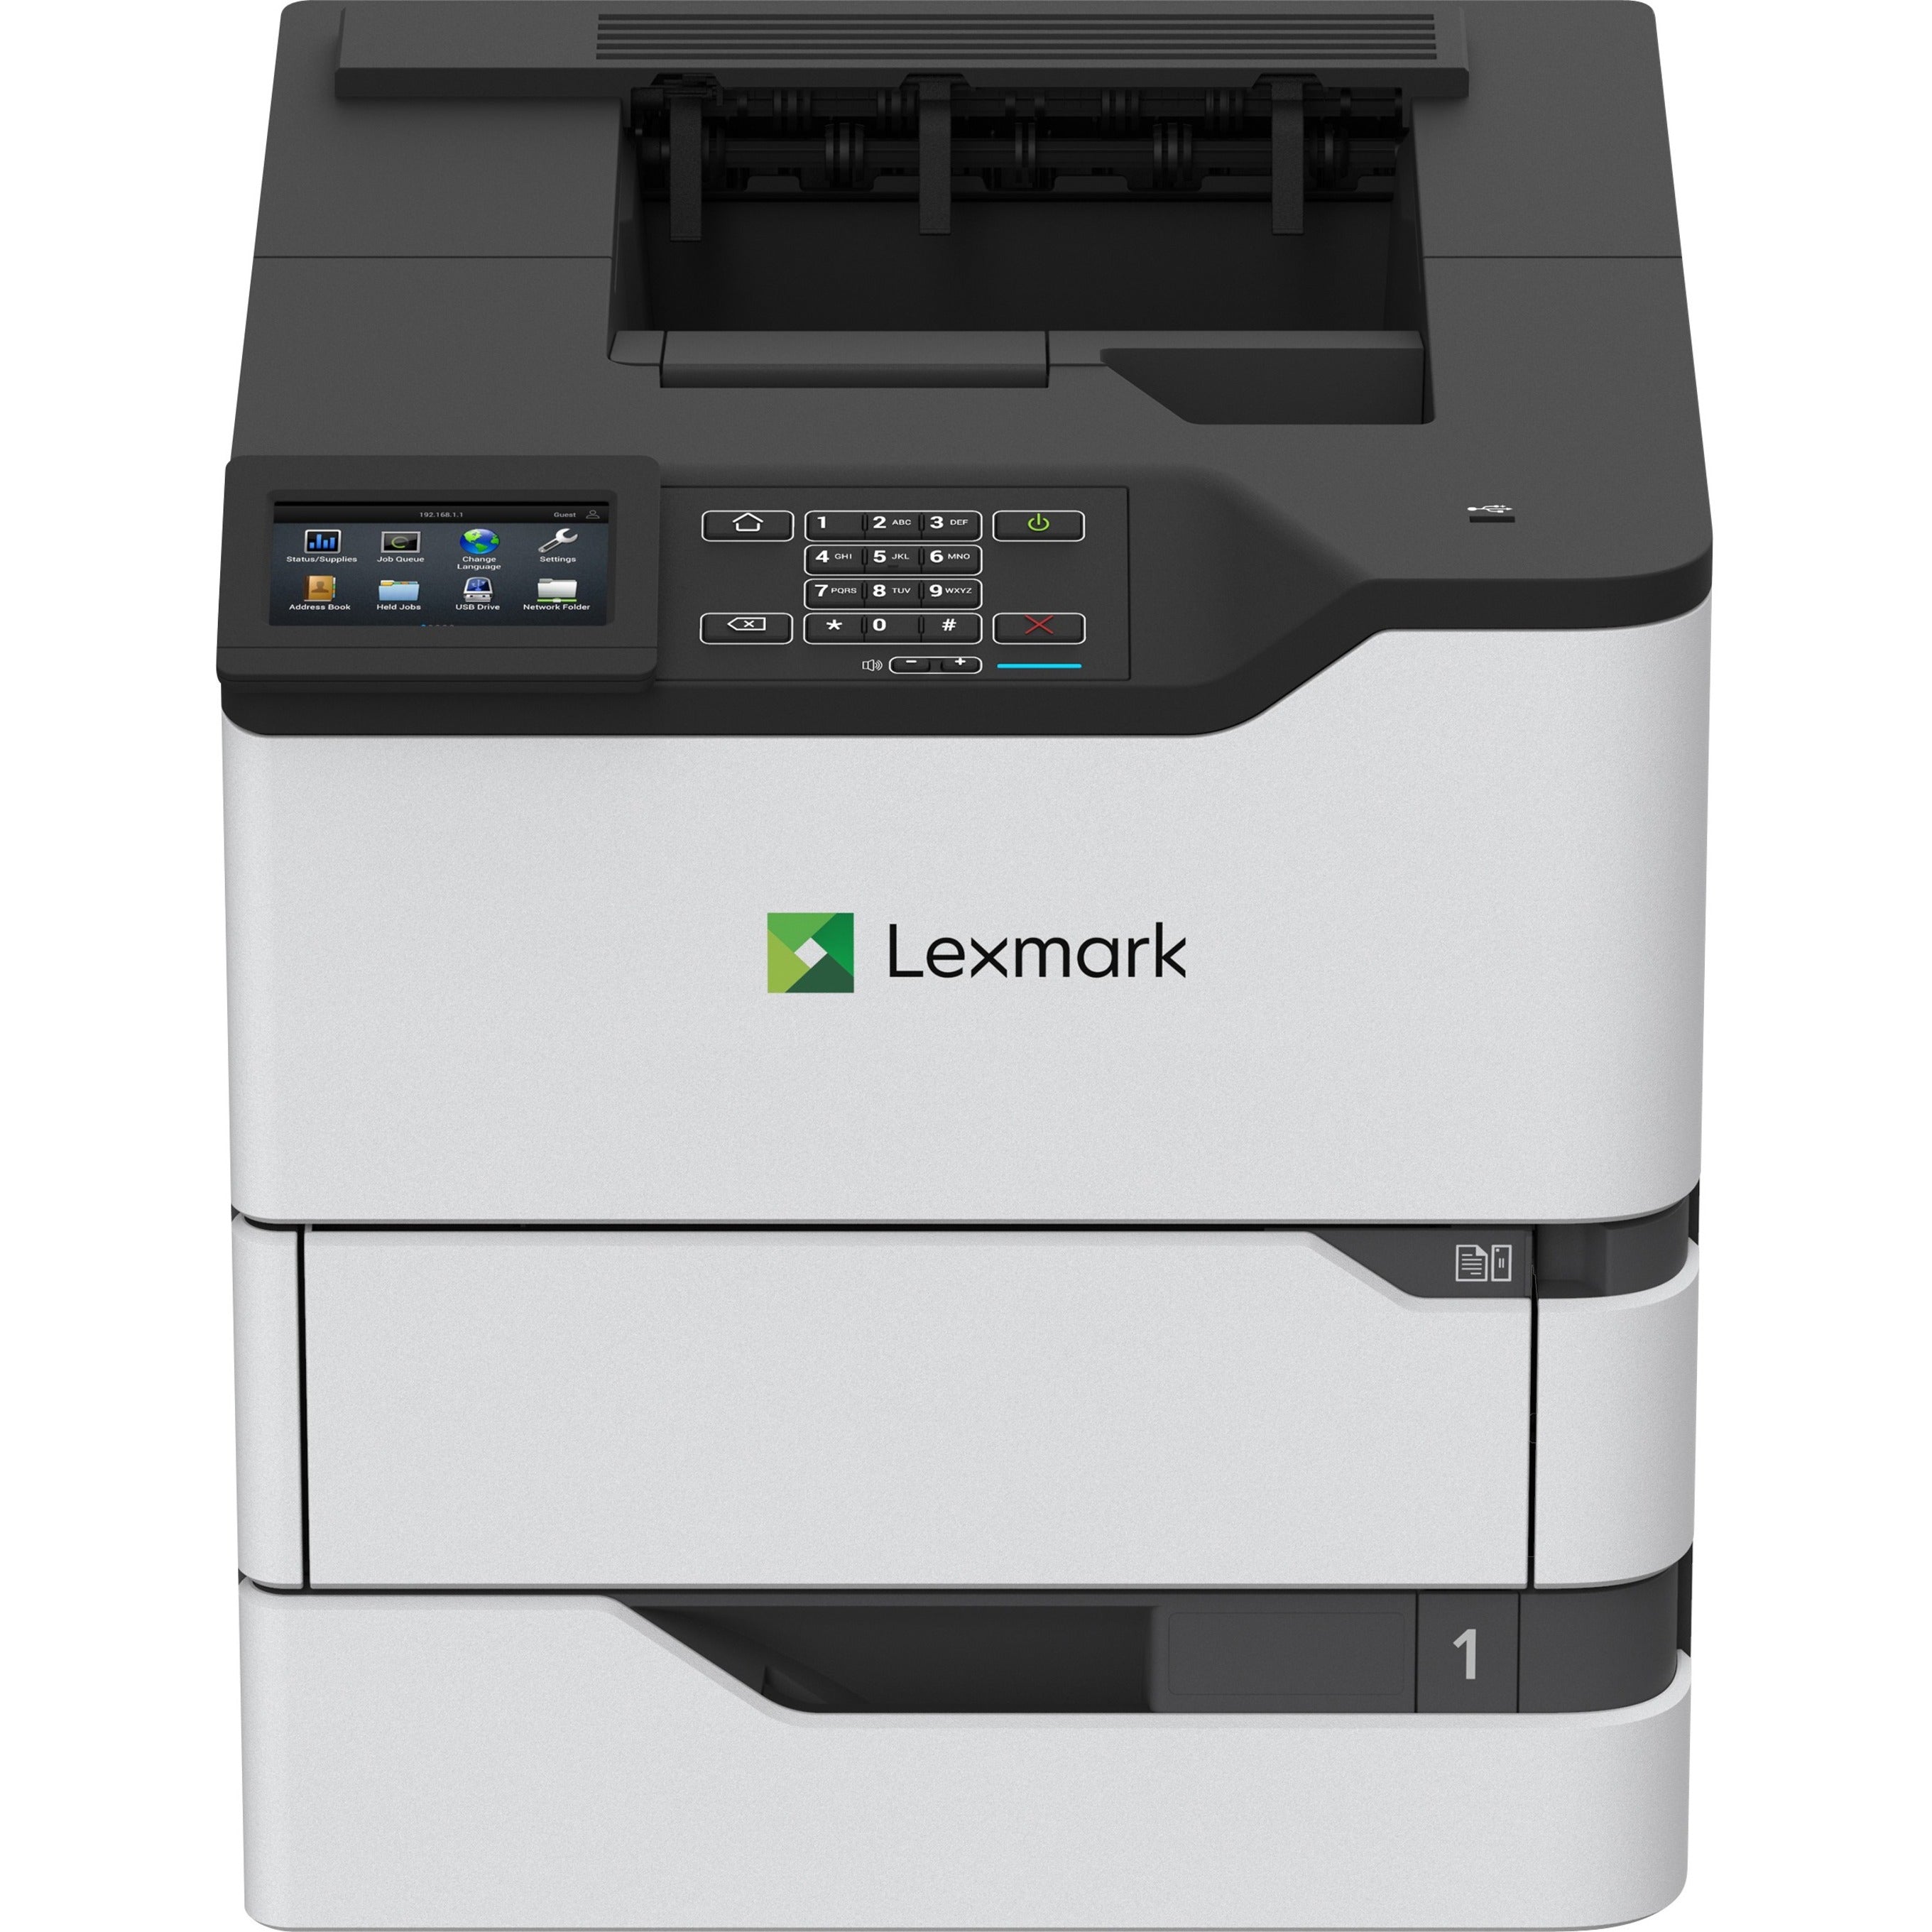 Lexmark 50GT310 MS826de Desktop Laser Printer - Monochrome, 70 ppm, 1200 x 1200 dpi, Automatic Duplex Printing